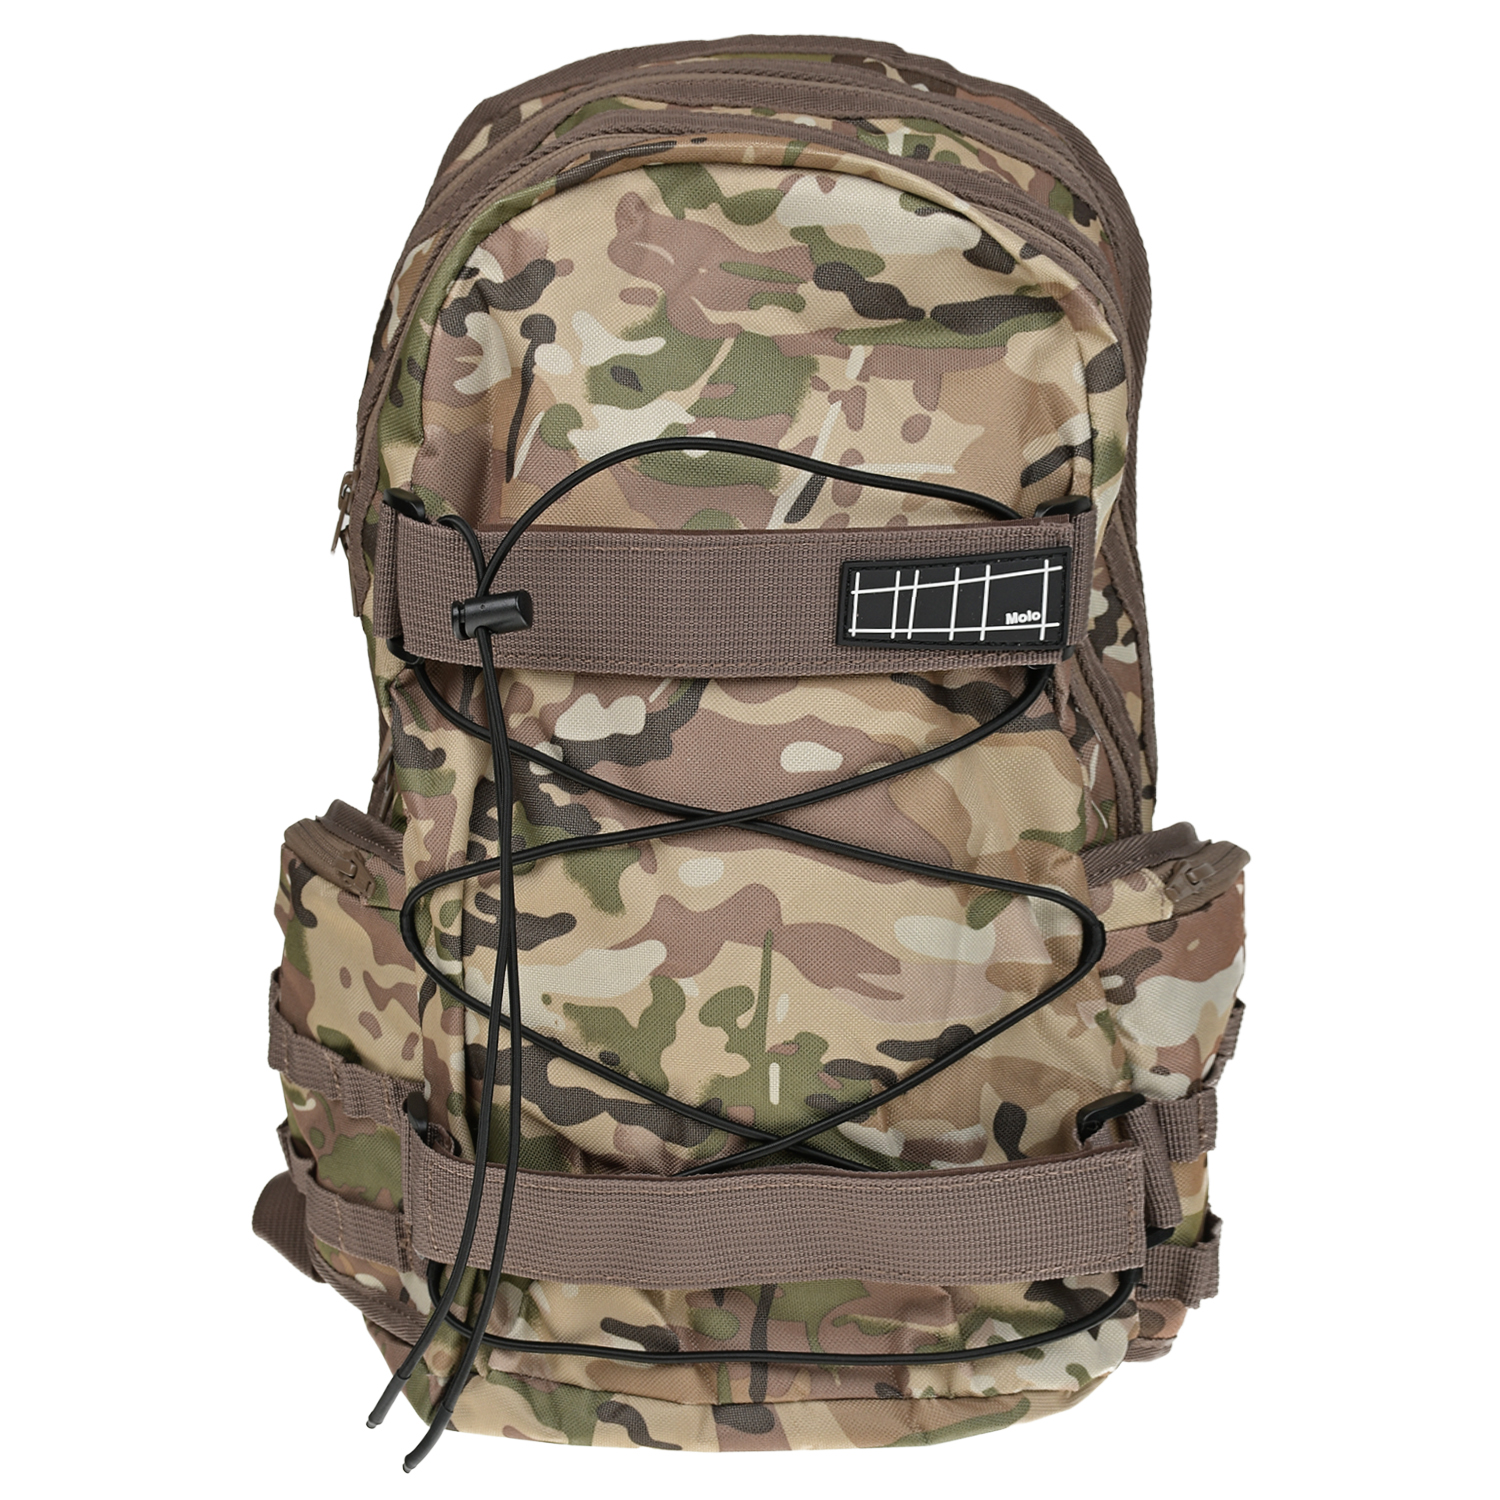 Рюкзак Skate Backpack Camouflage, 38x29x17 см Molo детский, размер unica, цвет мультиколор